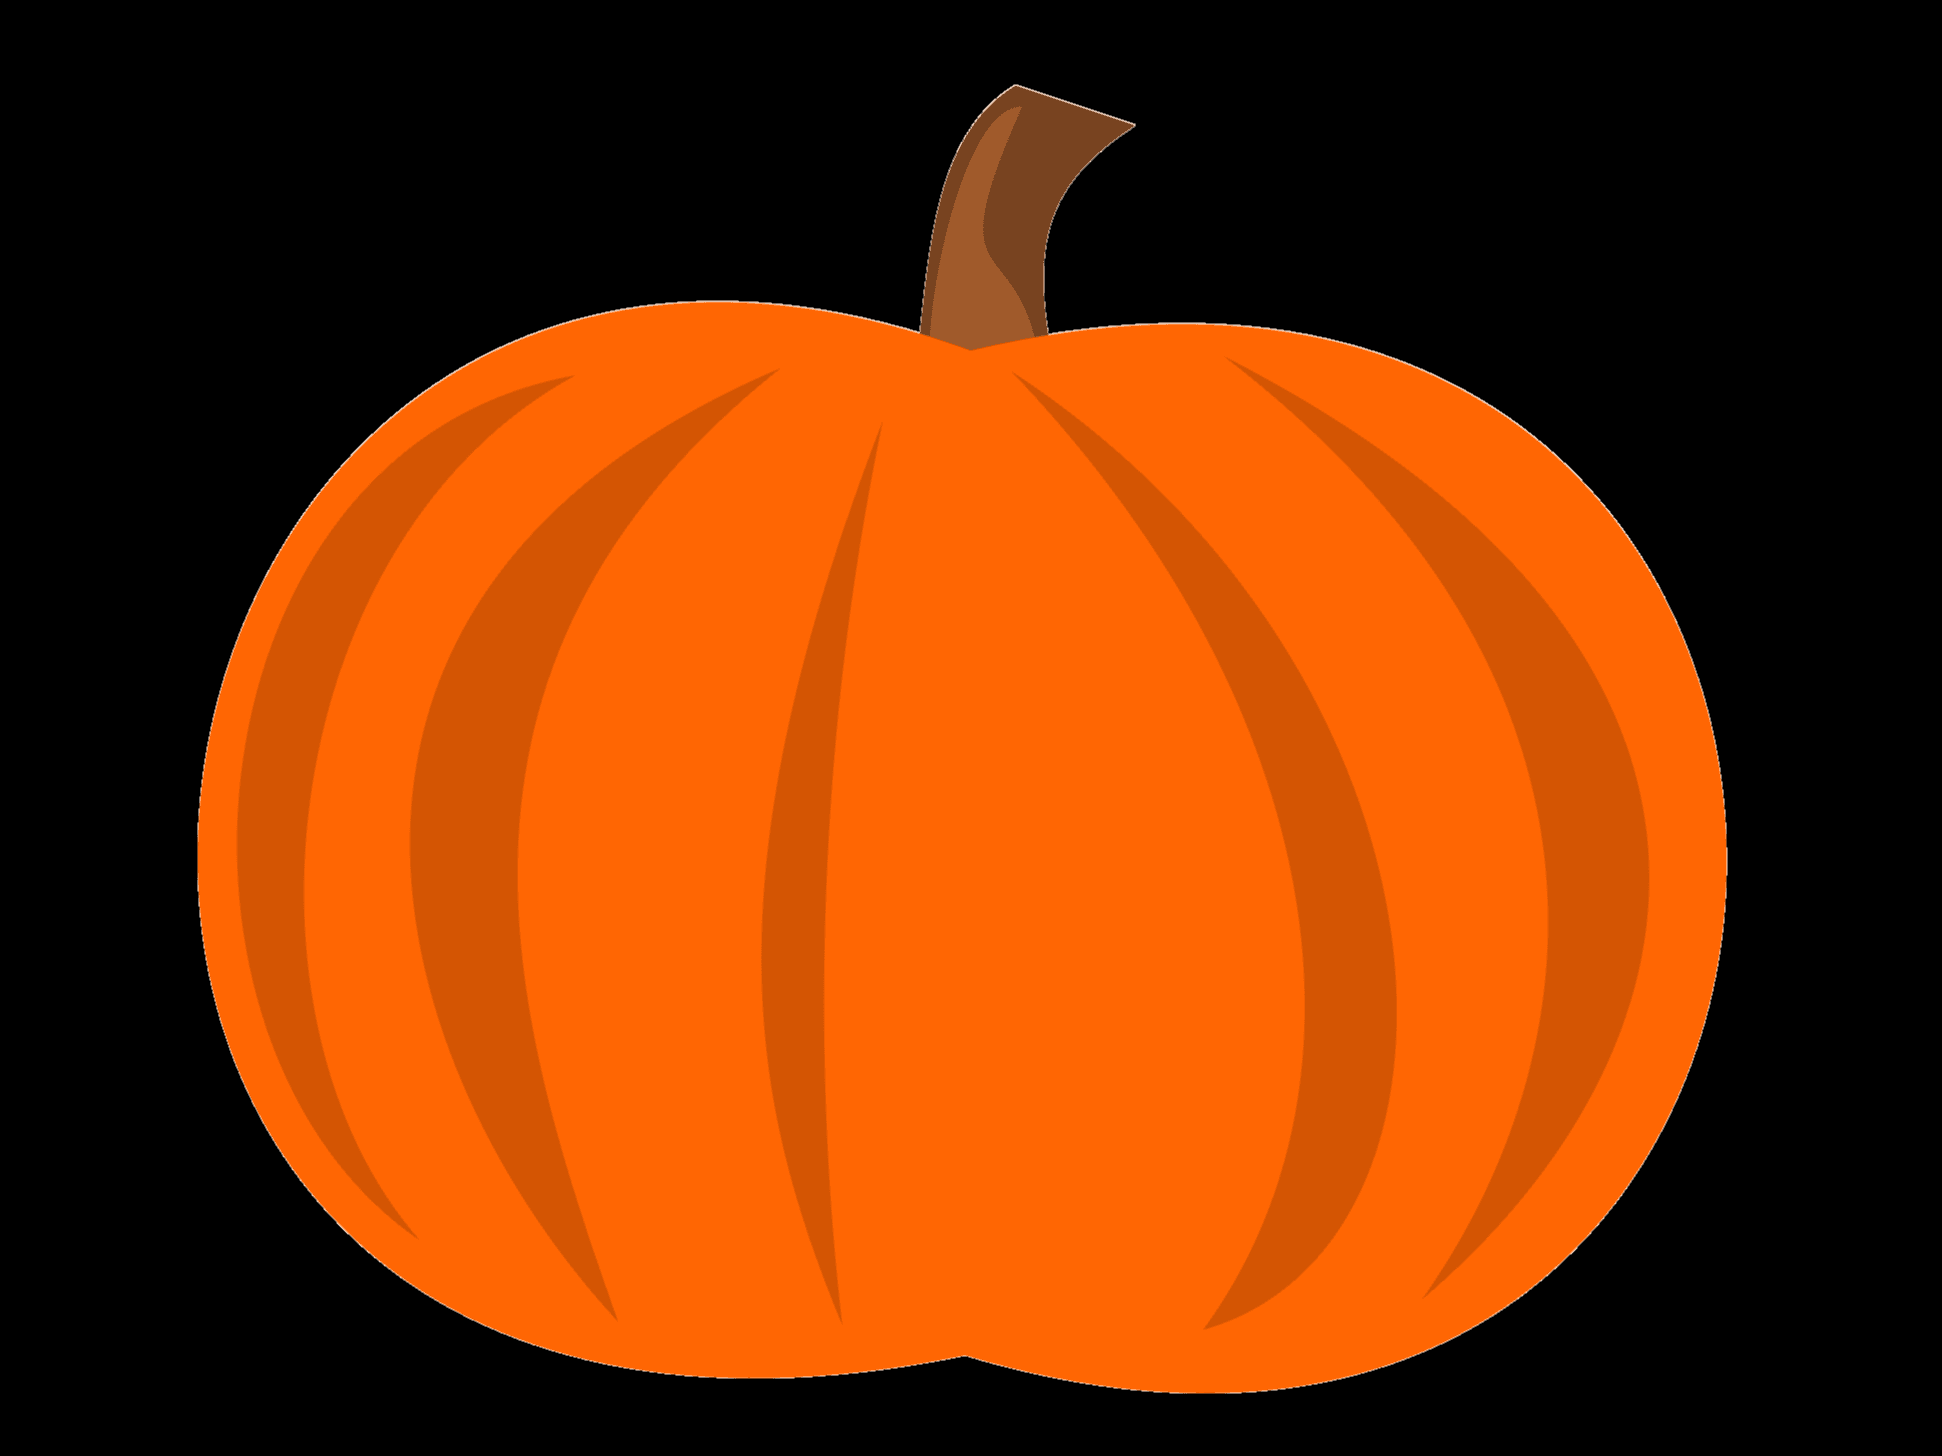 Carve a Pumpkin 7